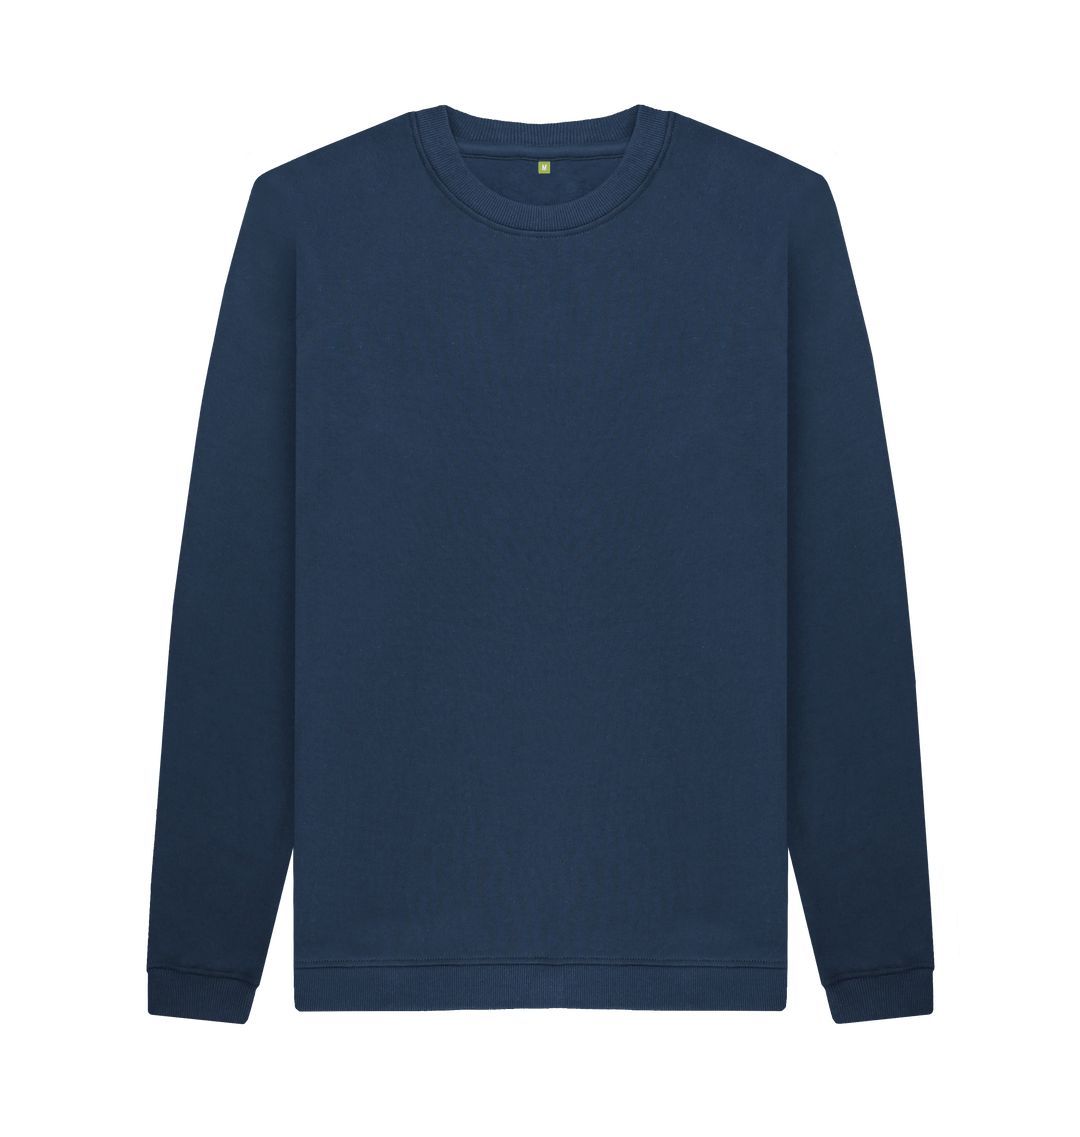 Navy Blue Men's organic cotton sweatshirt